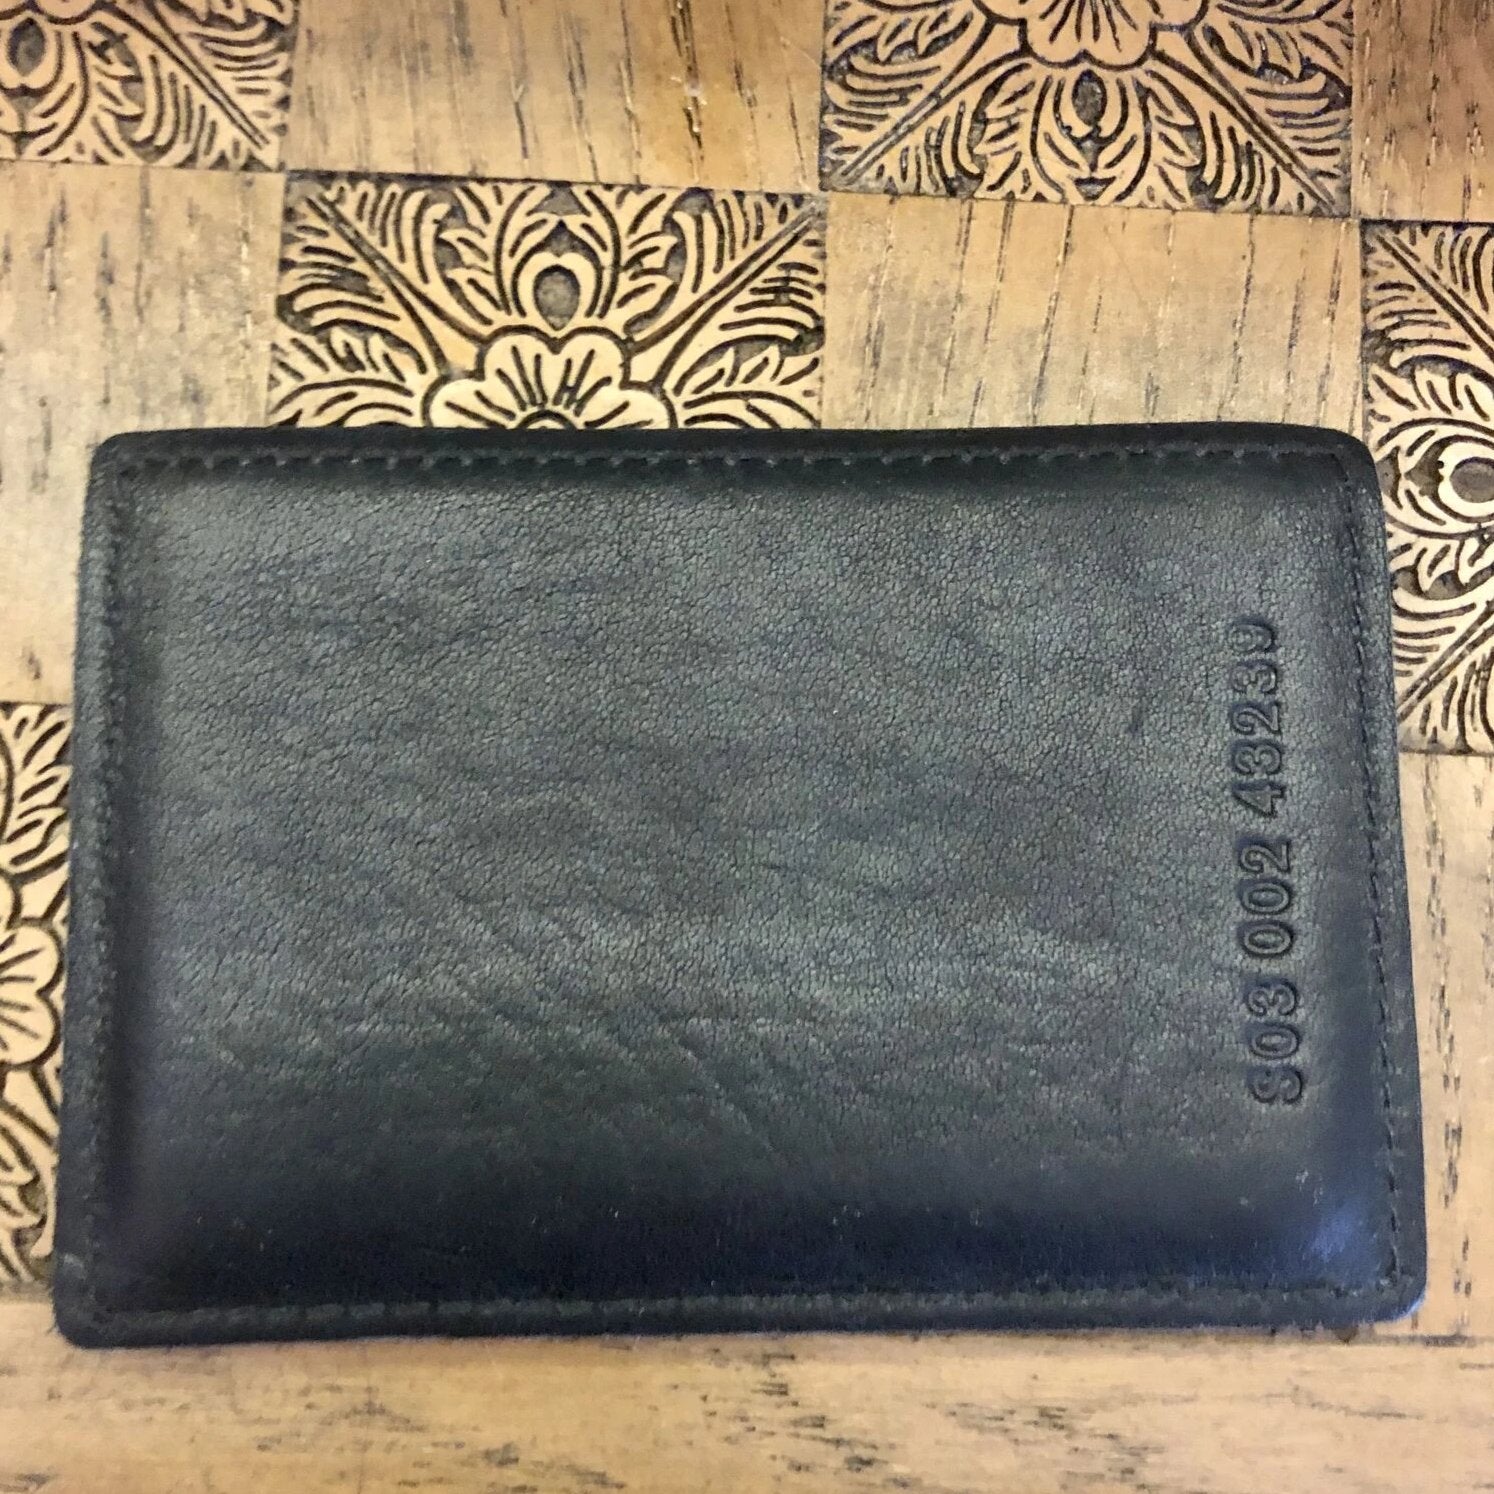 Shinola Black Leather Card Case